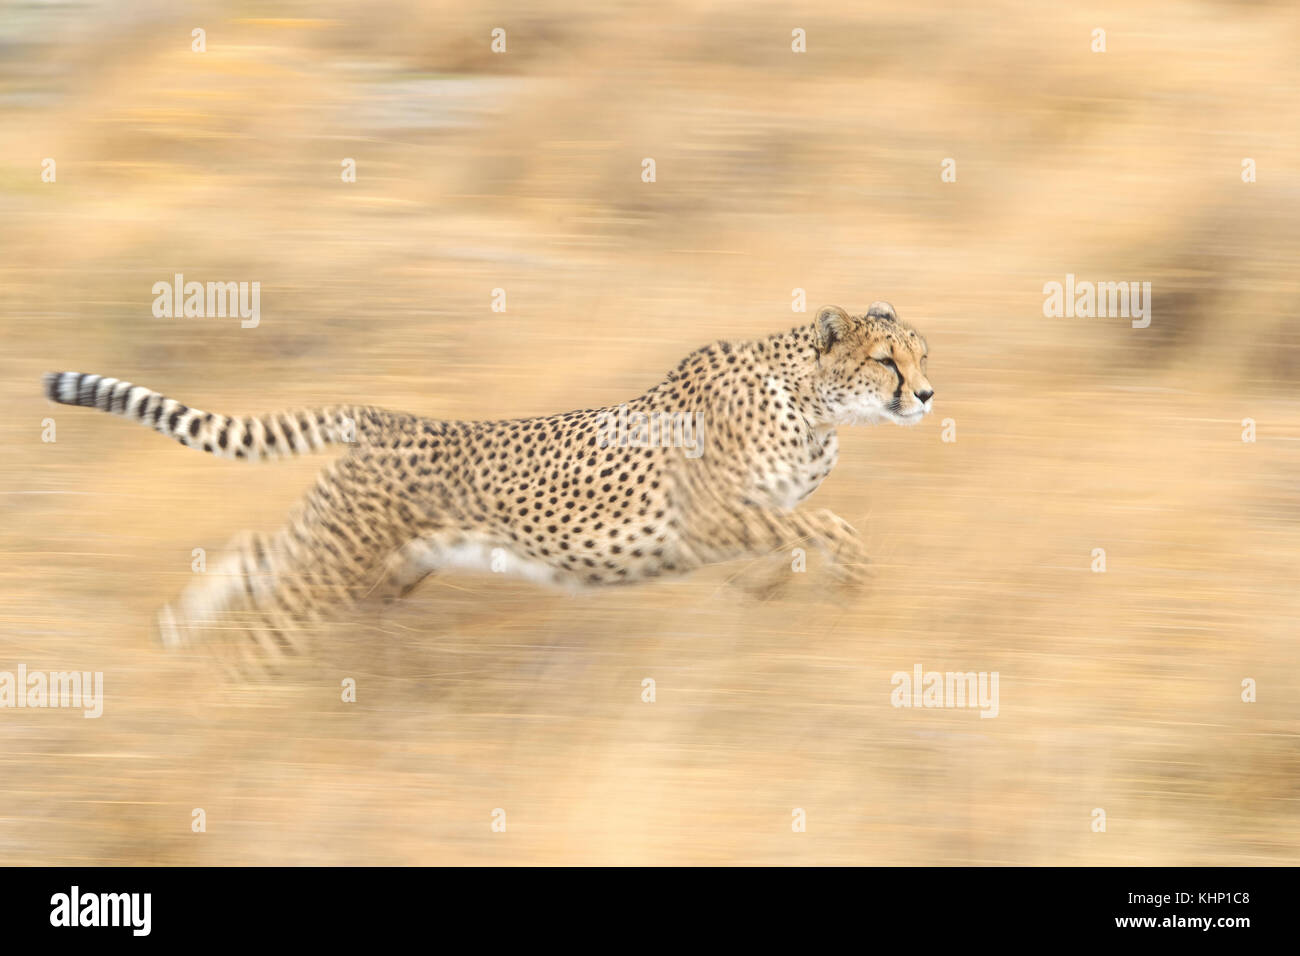 A Female Cheetah Running At Full Speed Chasing An Impala In Kenya Africa Stock Photo Alamy